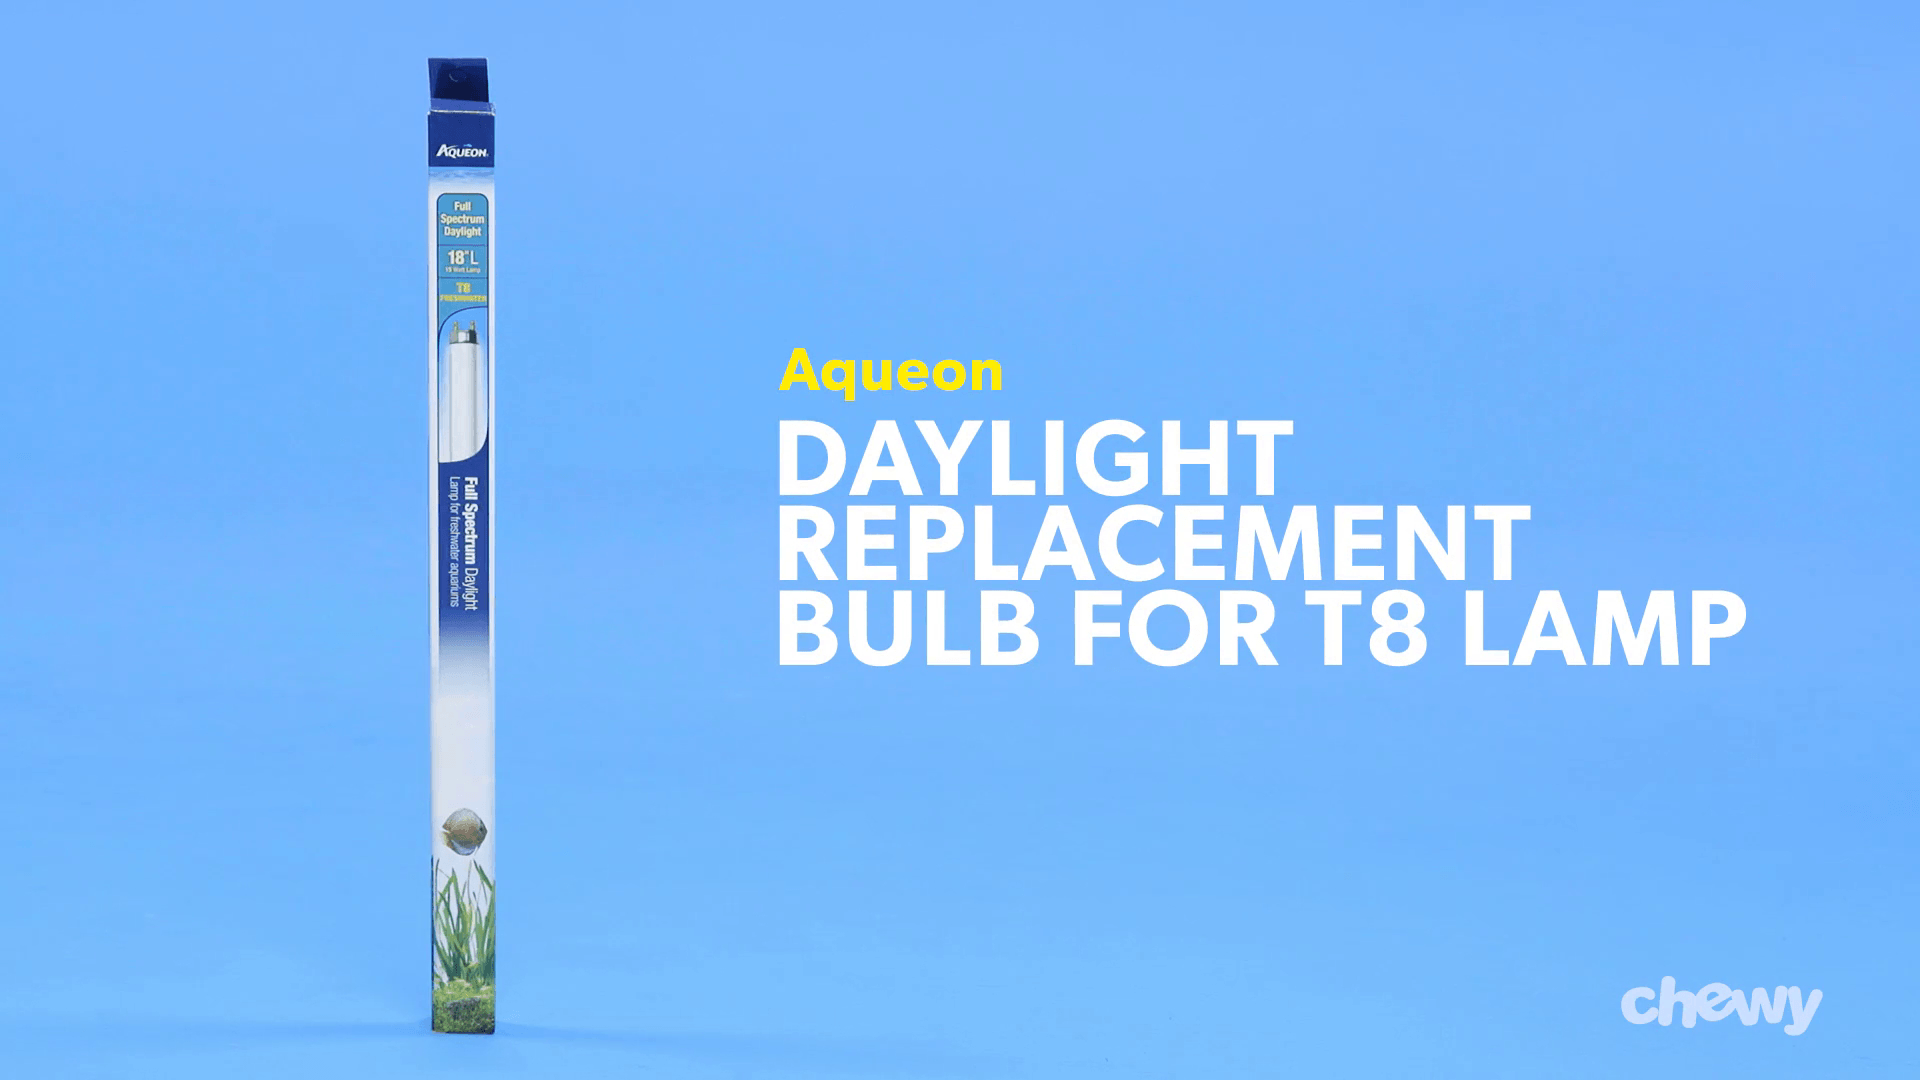 Aqueon Logo - Aqueon Daylight Replacement Bulb for T8 Lamp, 15 Watt, 18-in